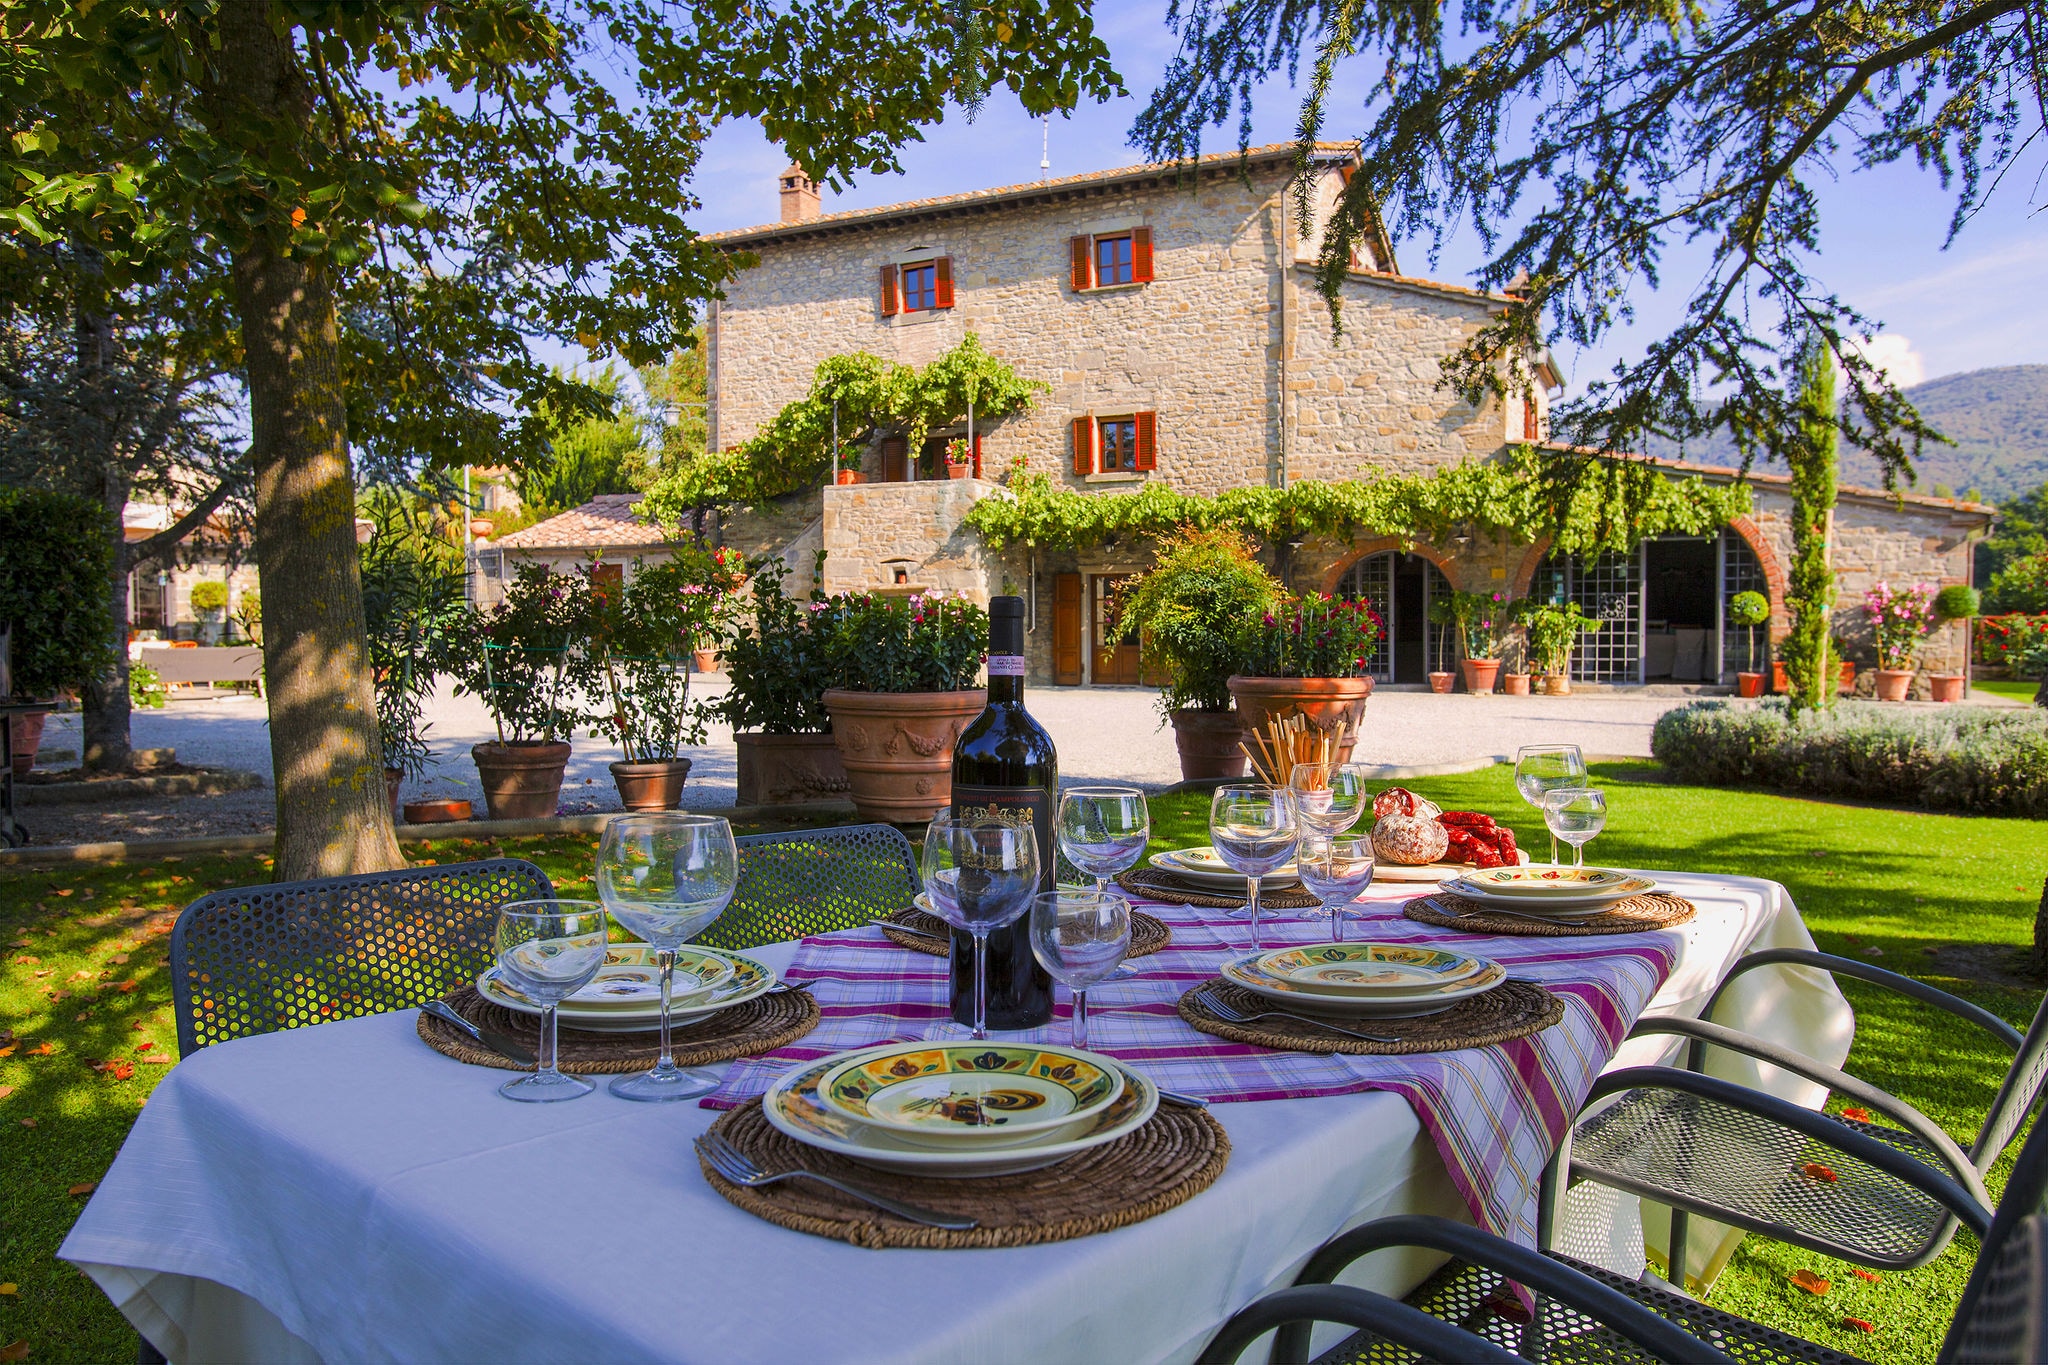 Agriturismo near Cortona with spacious garden and swimming pool